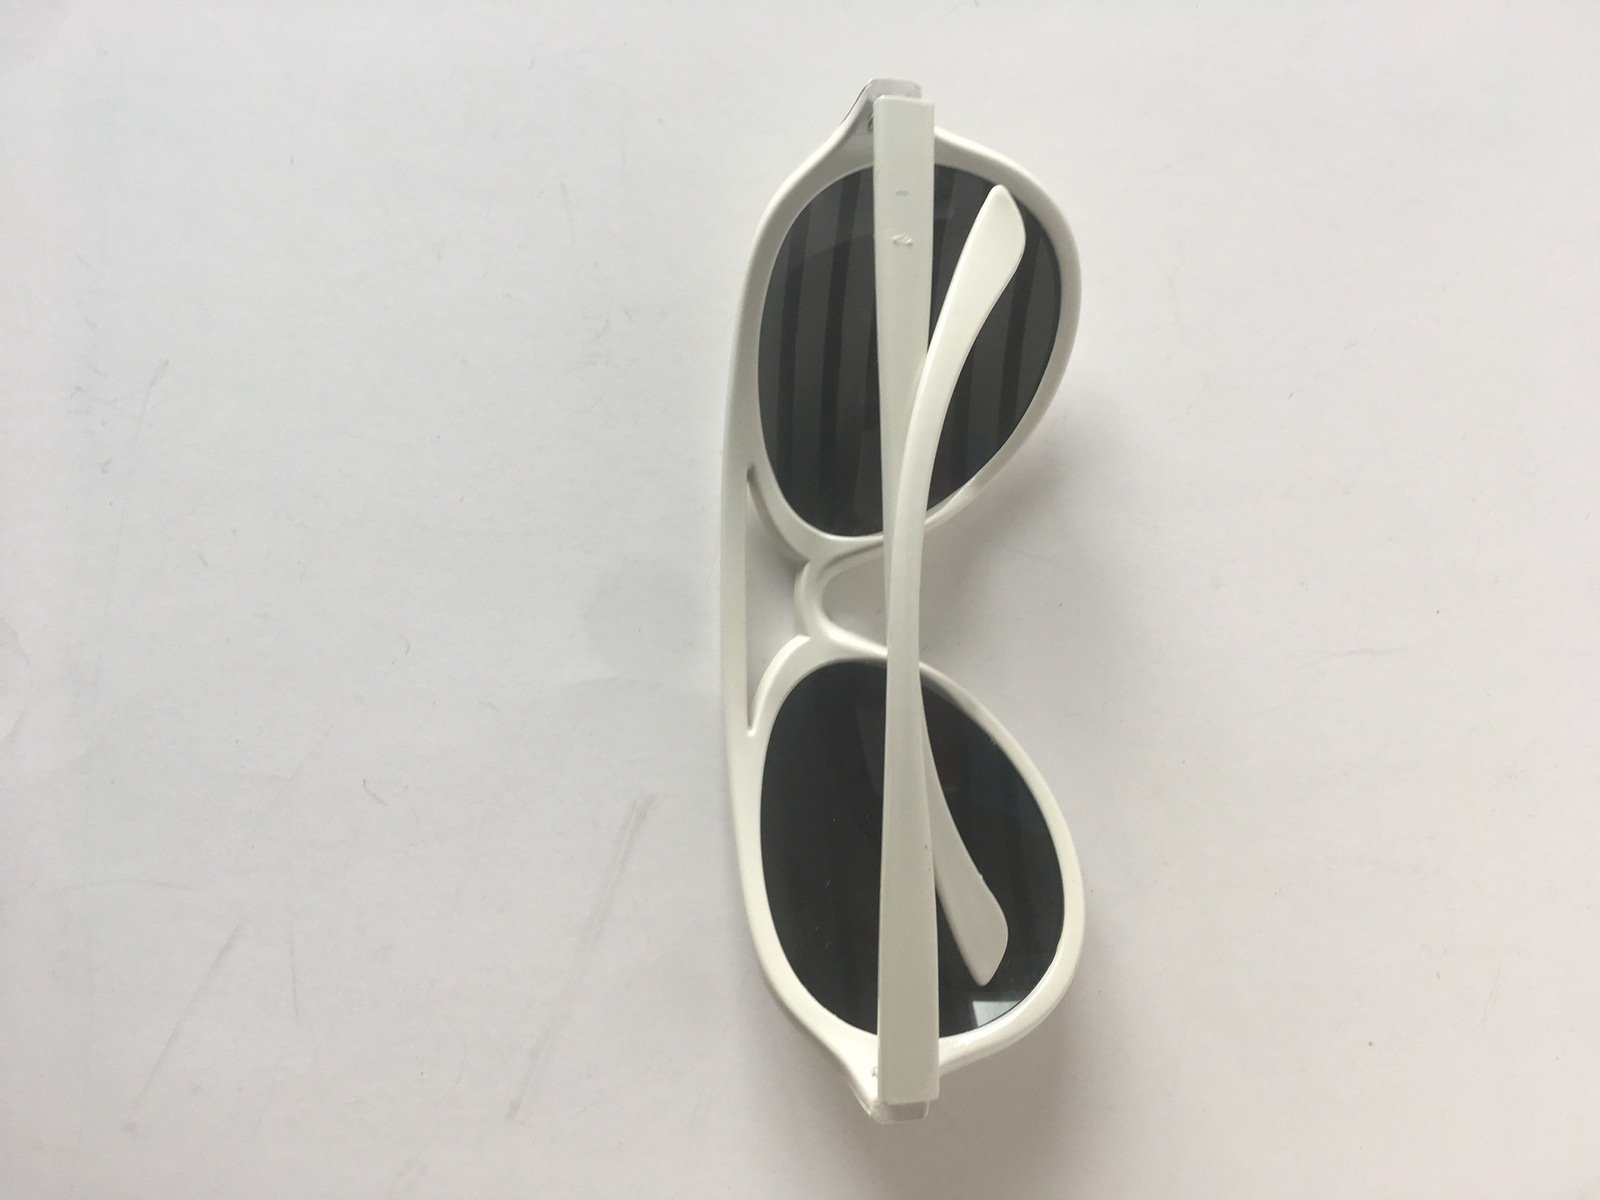 Mirrored Lenses 80s Slats Glasses White Plastic Frame Iconic Sunglasses